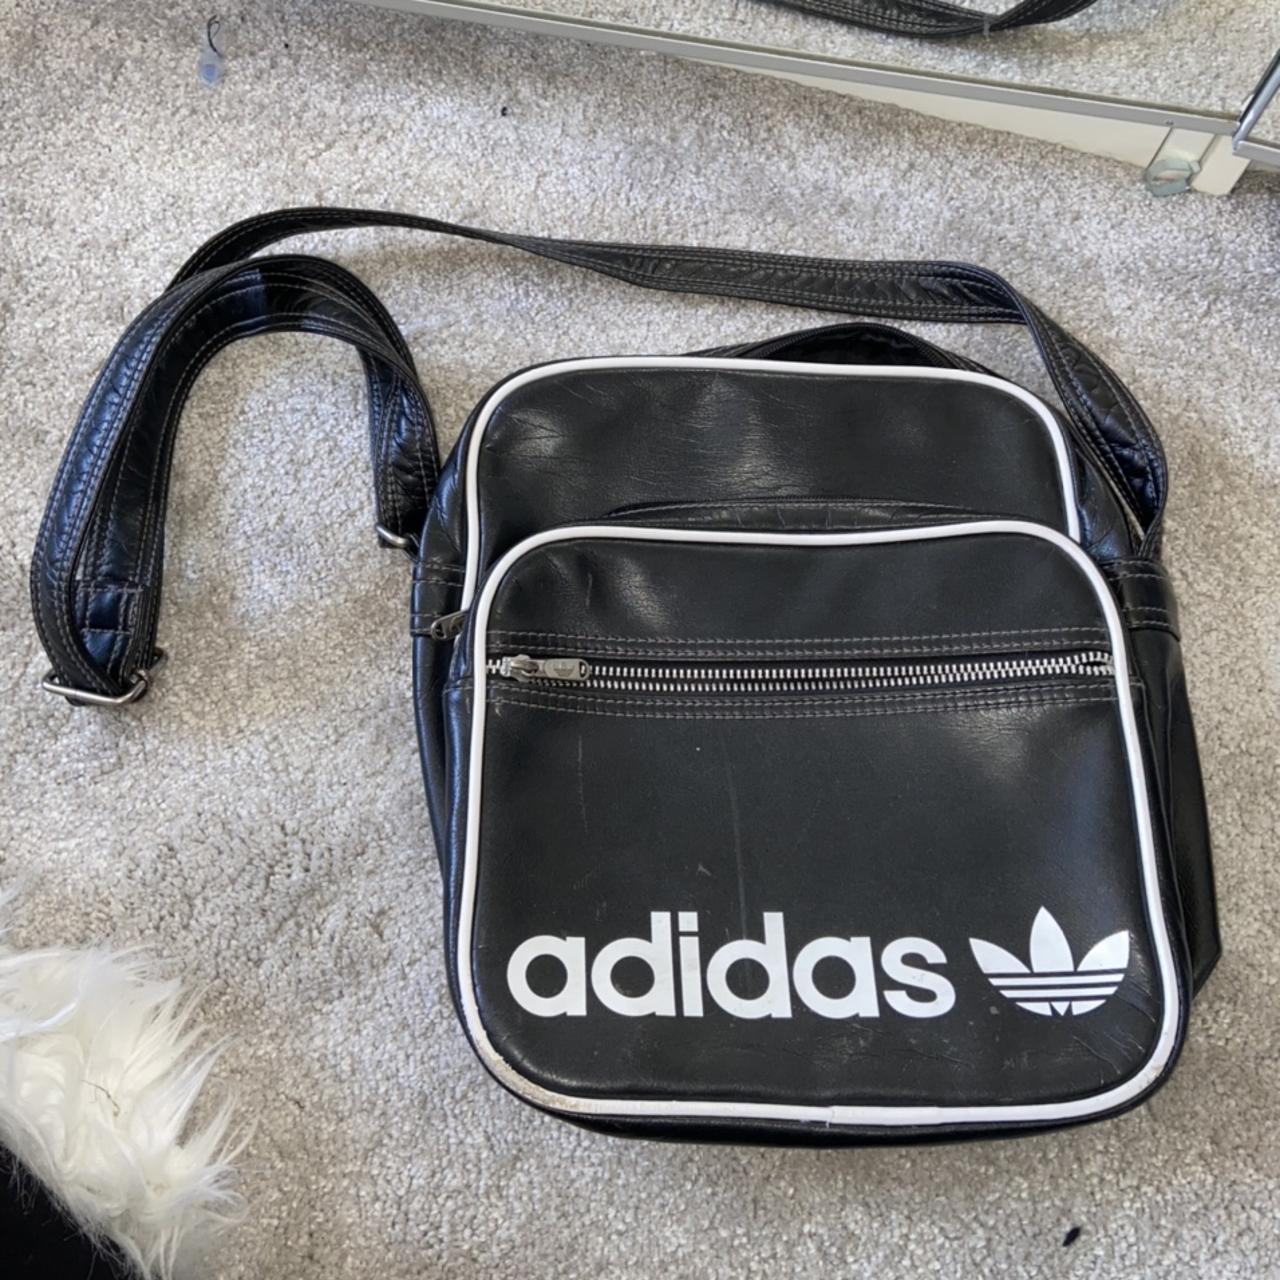 Adidas black messenger bag. - Depop